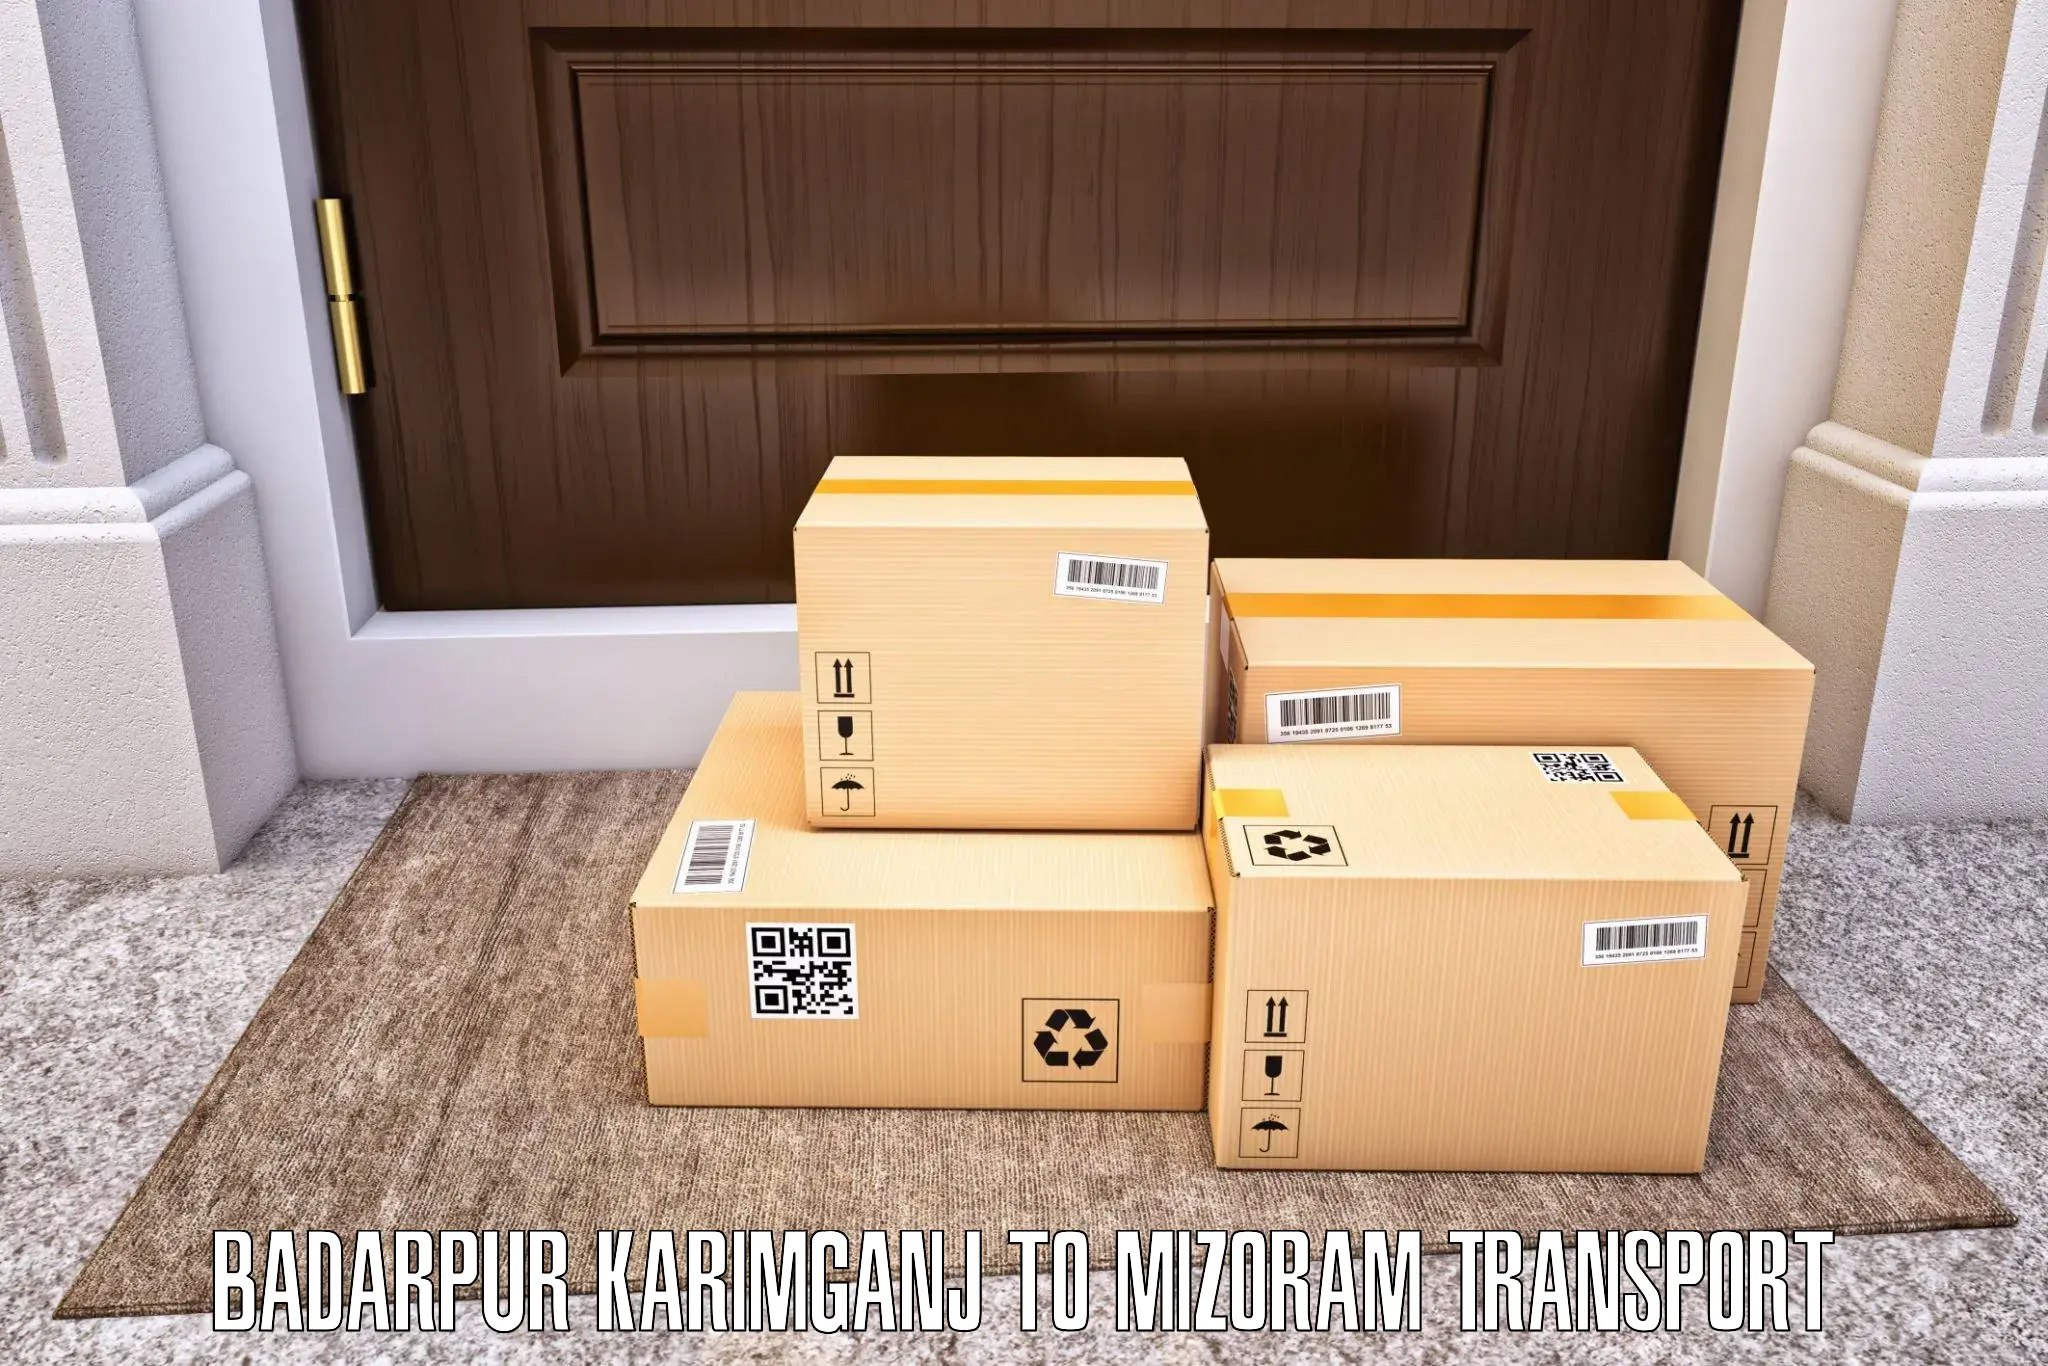 Container transport service Badarpur Karimganj to Serchhip